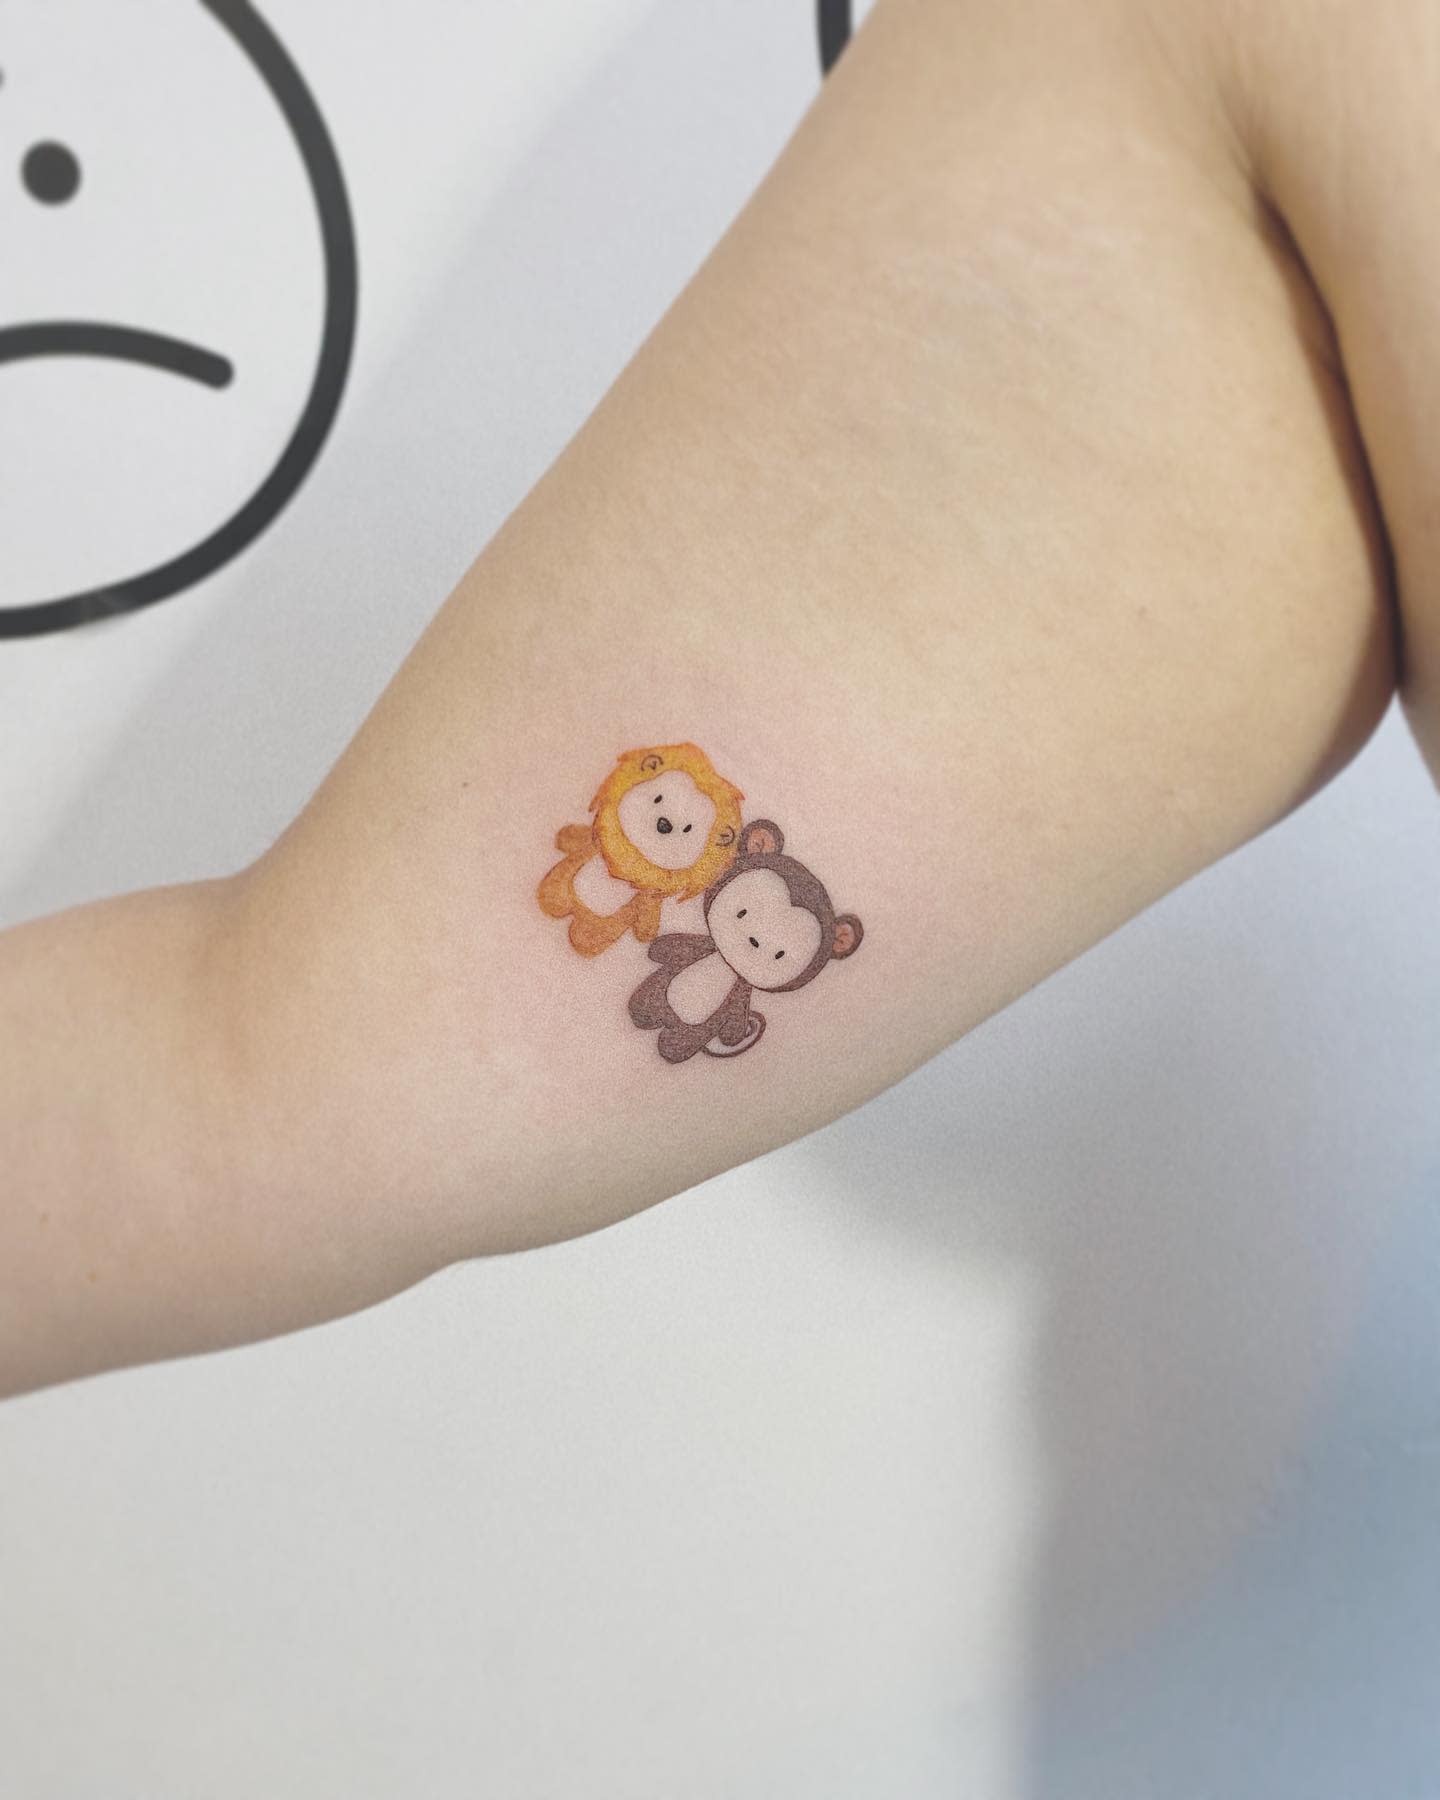 Cute Monkey Tattoo -ecstacytat2s